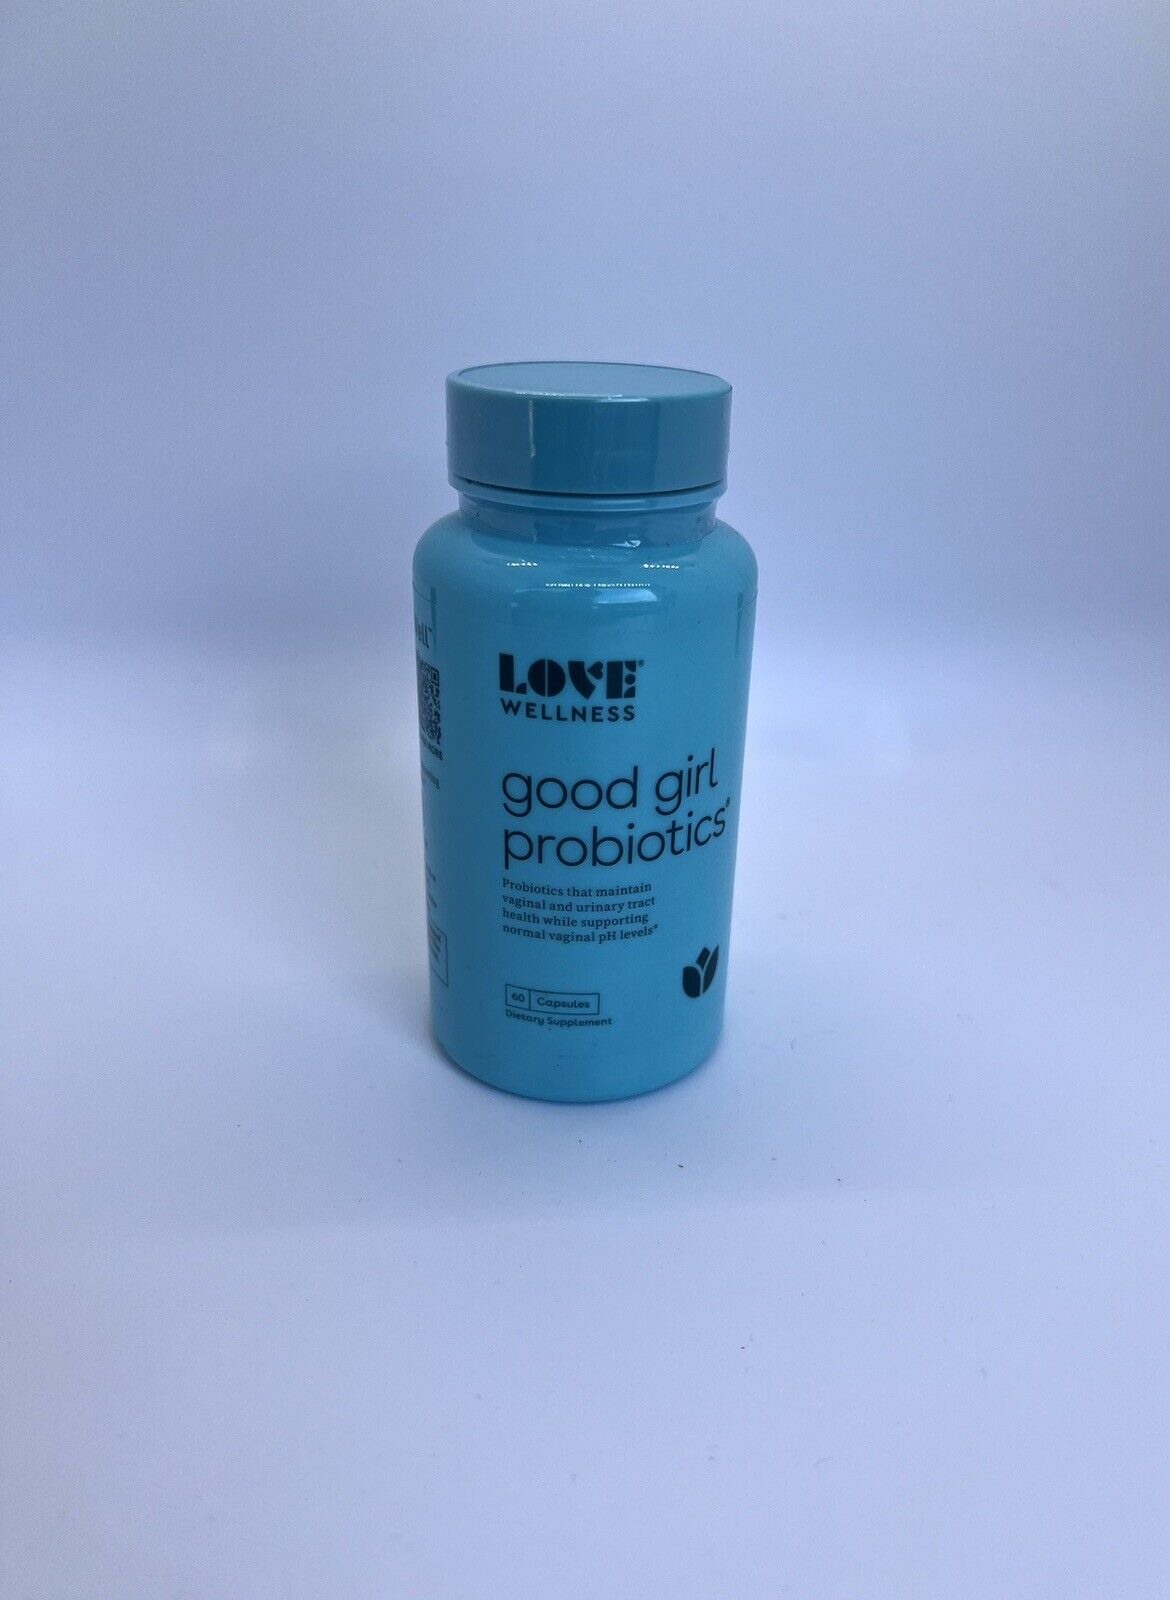 LOVE WELLNESS Vaginal Good Girl Probiotics - 60 caps - EXP. 12/2024, Sealed